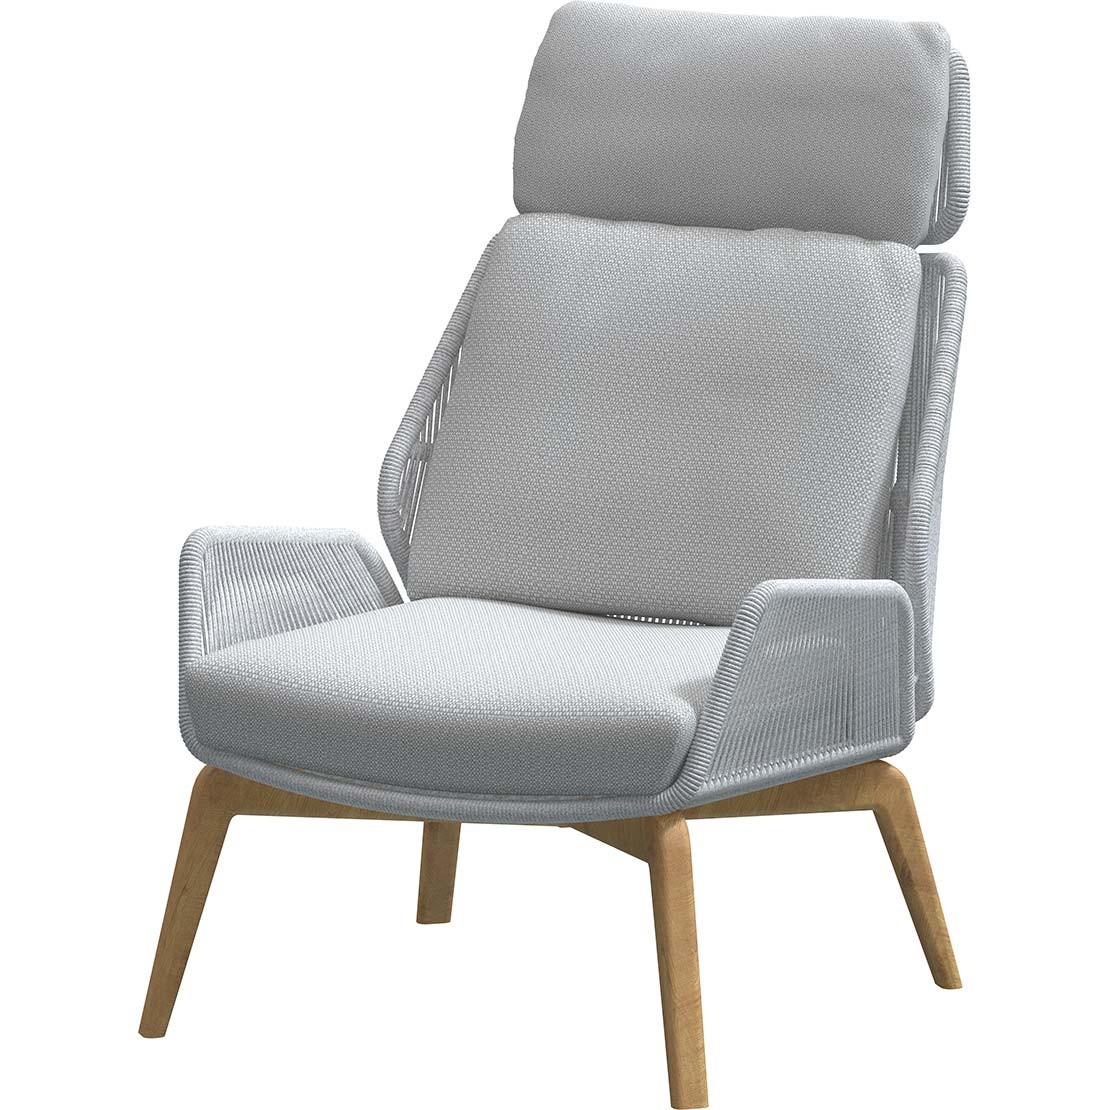 Van God omroeper Kalmte Carthago teak living chair Frozen with 2 cushions